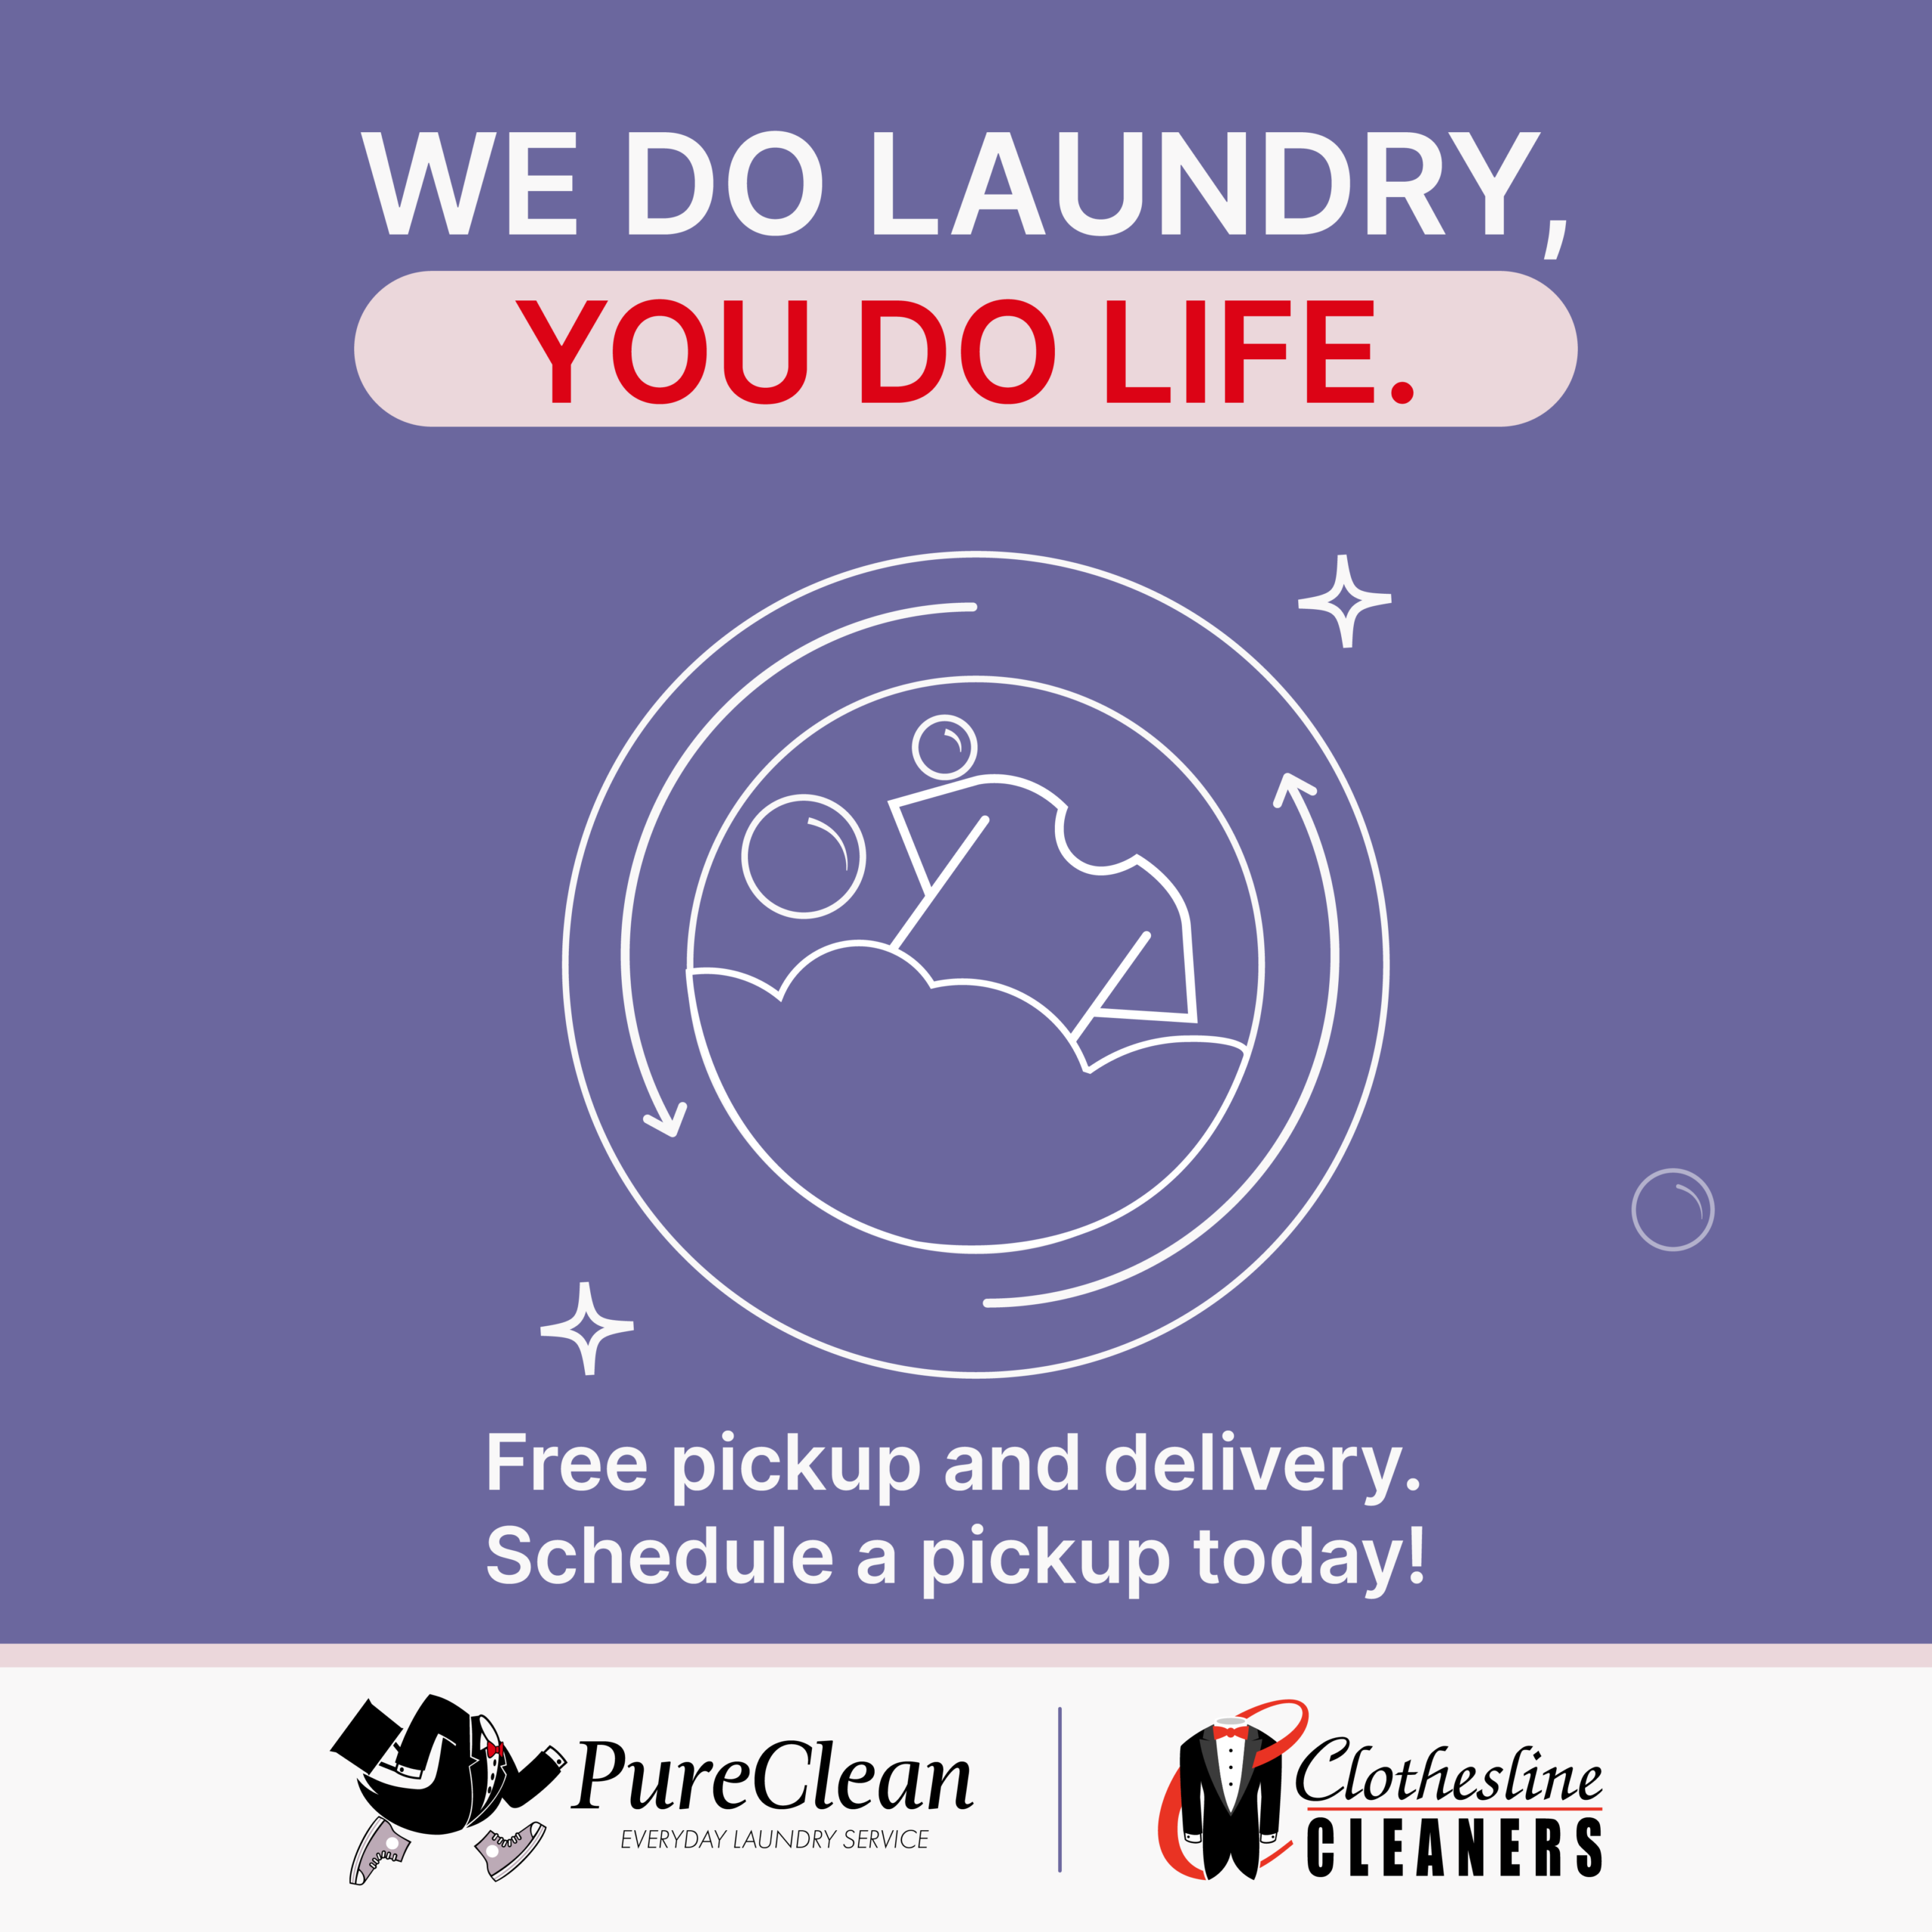 PureClean - We Do Laundry, You Do Life.